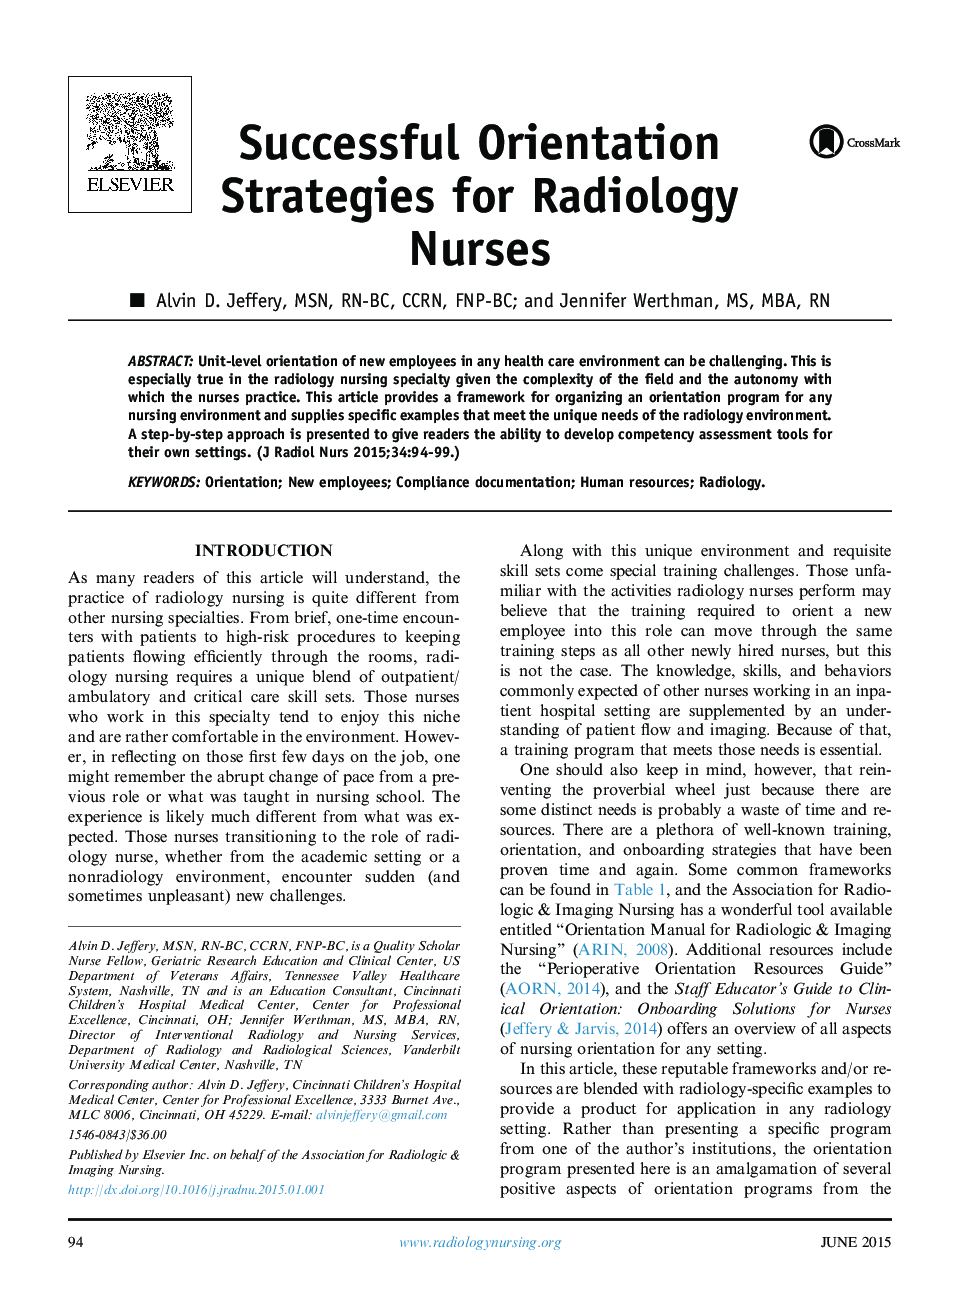 Successful Orientation Strategies for Radiology Nurses